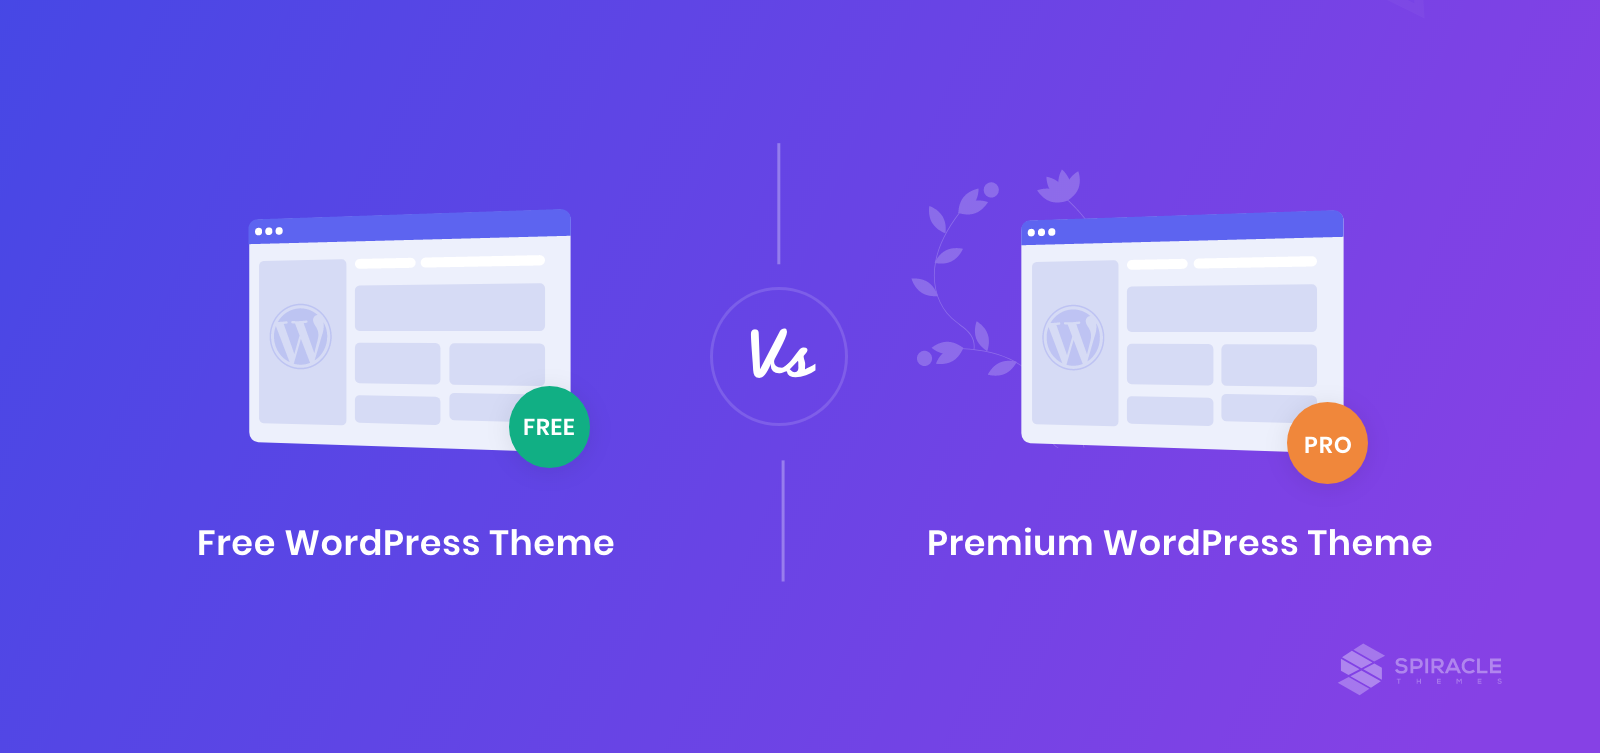 Free WordPress Theme vs Premium WordPress Theme